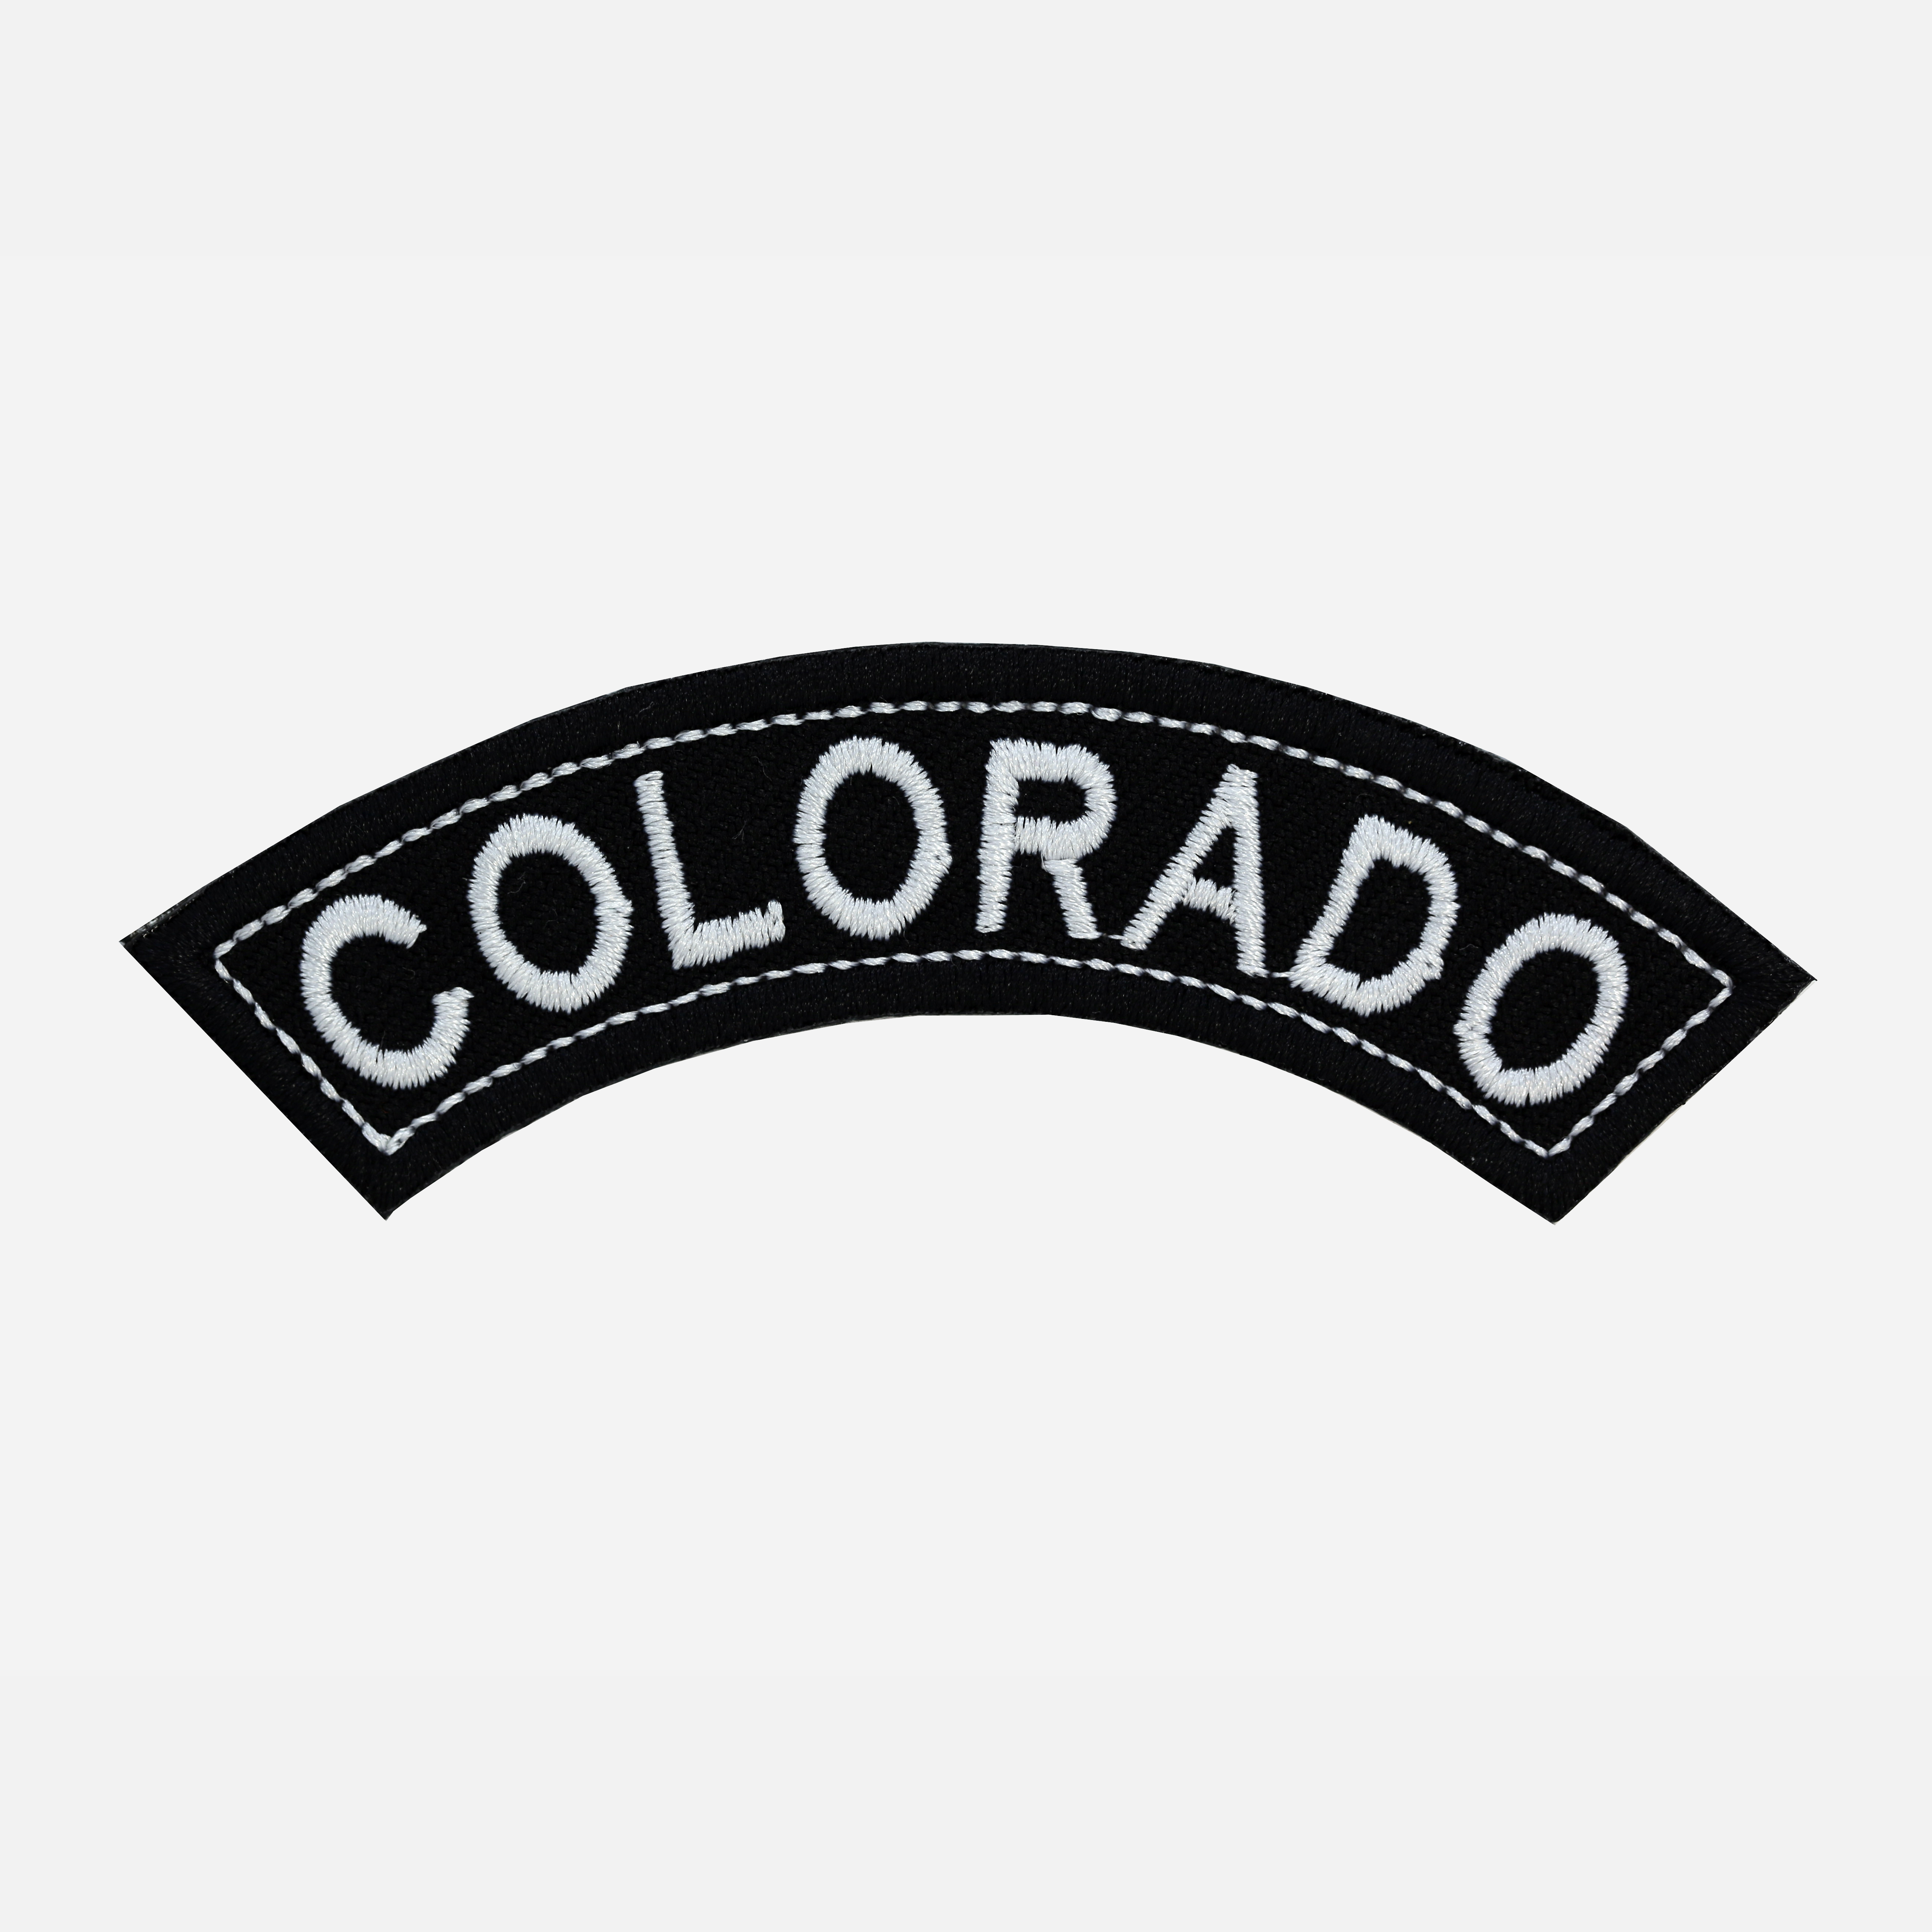 Colorado Mini Top Rocker Embroidered Vest Patch